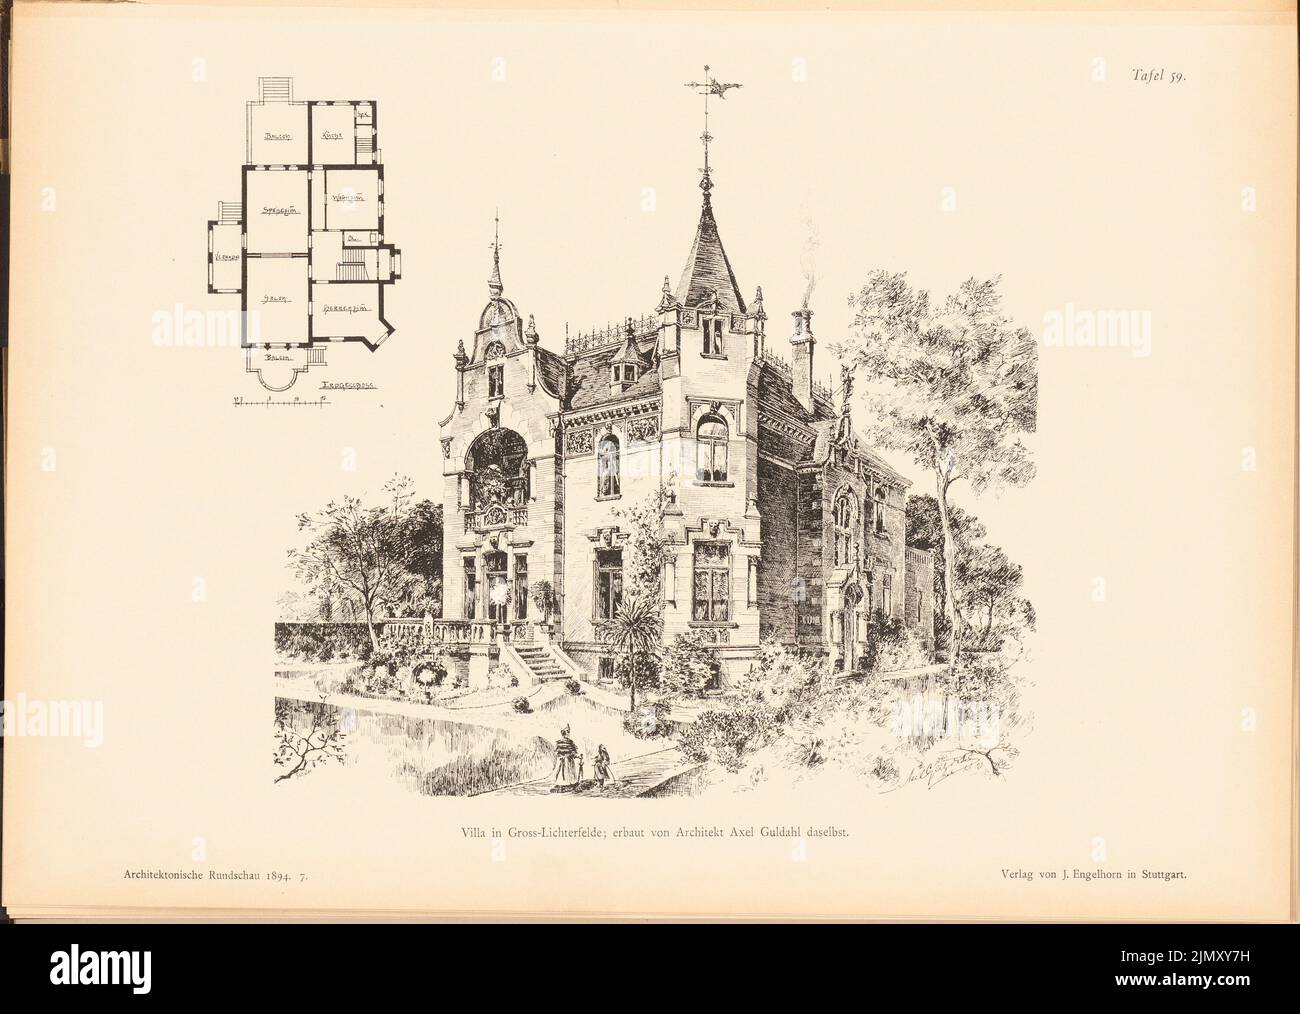 Güldahl Axel, Villa, Groß-Lichterfelde. (From: Architect. Rundschau, ed. Pressure on paper, 27.4 x 38.6 cm (including scan edges) Stock Photo